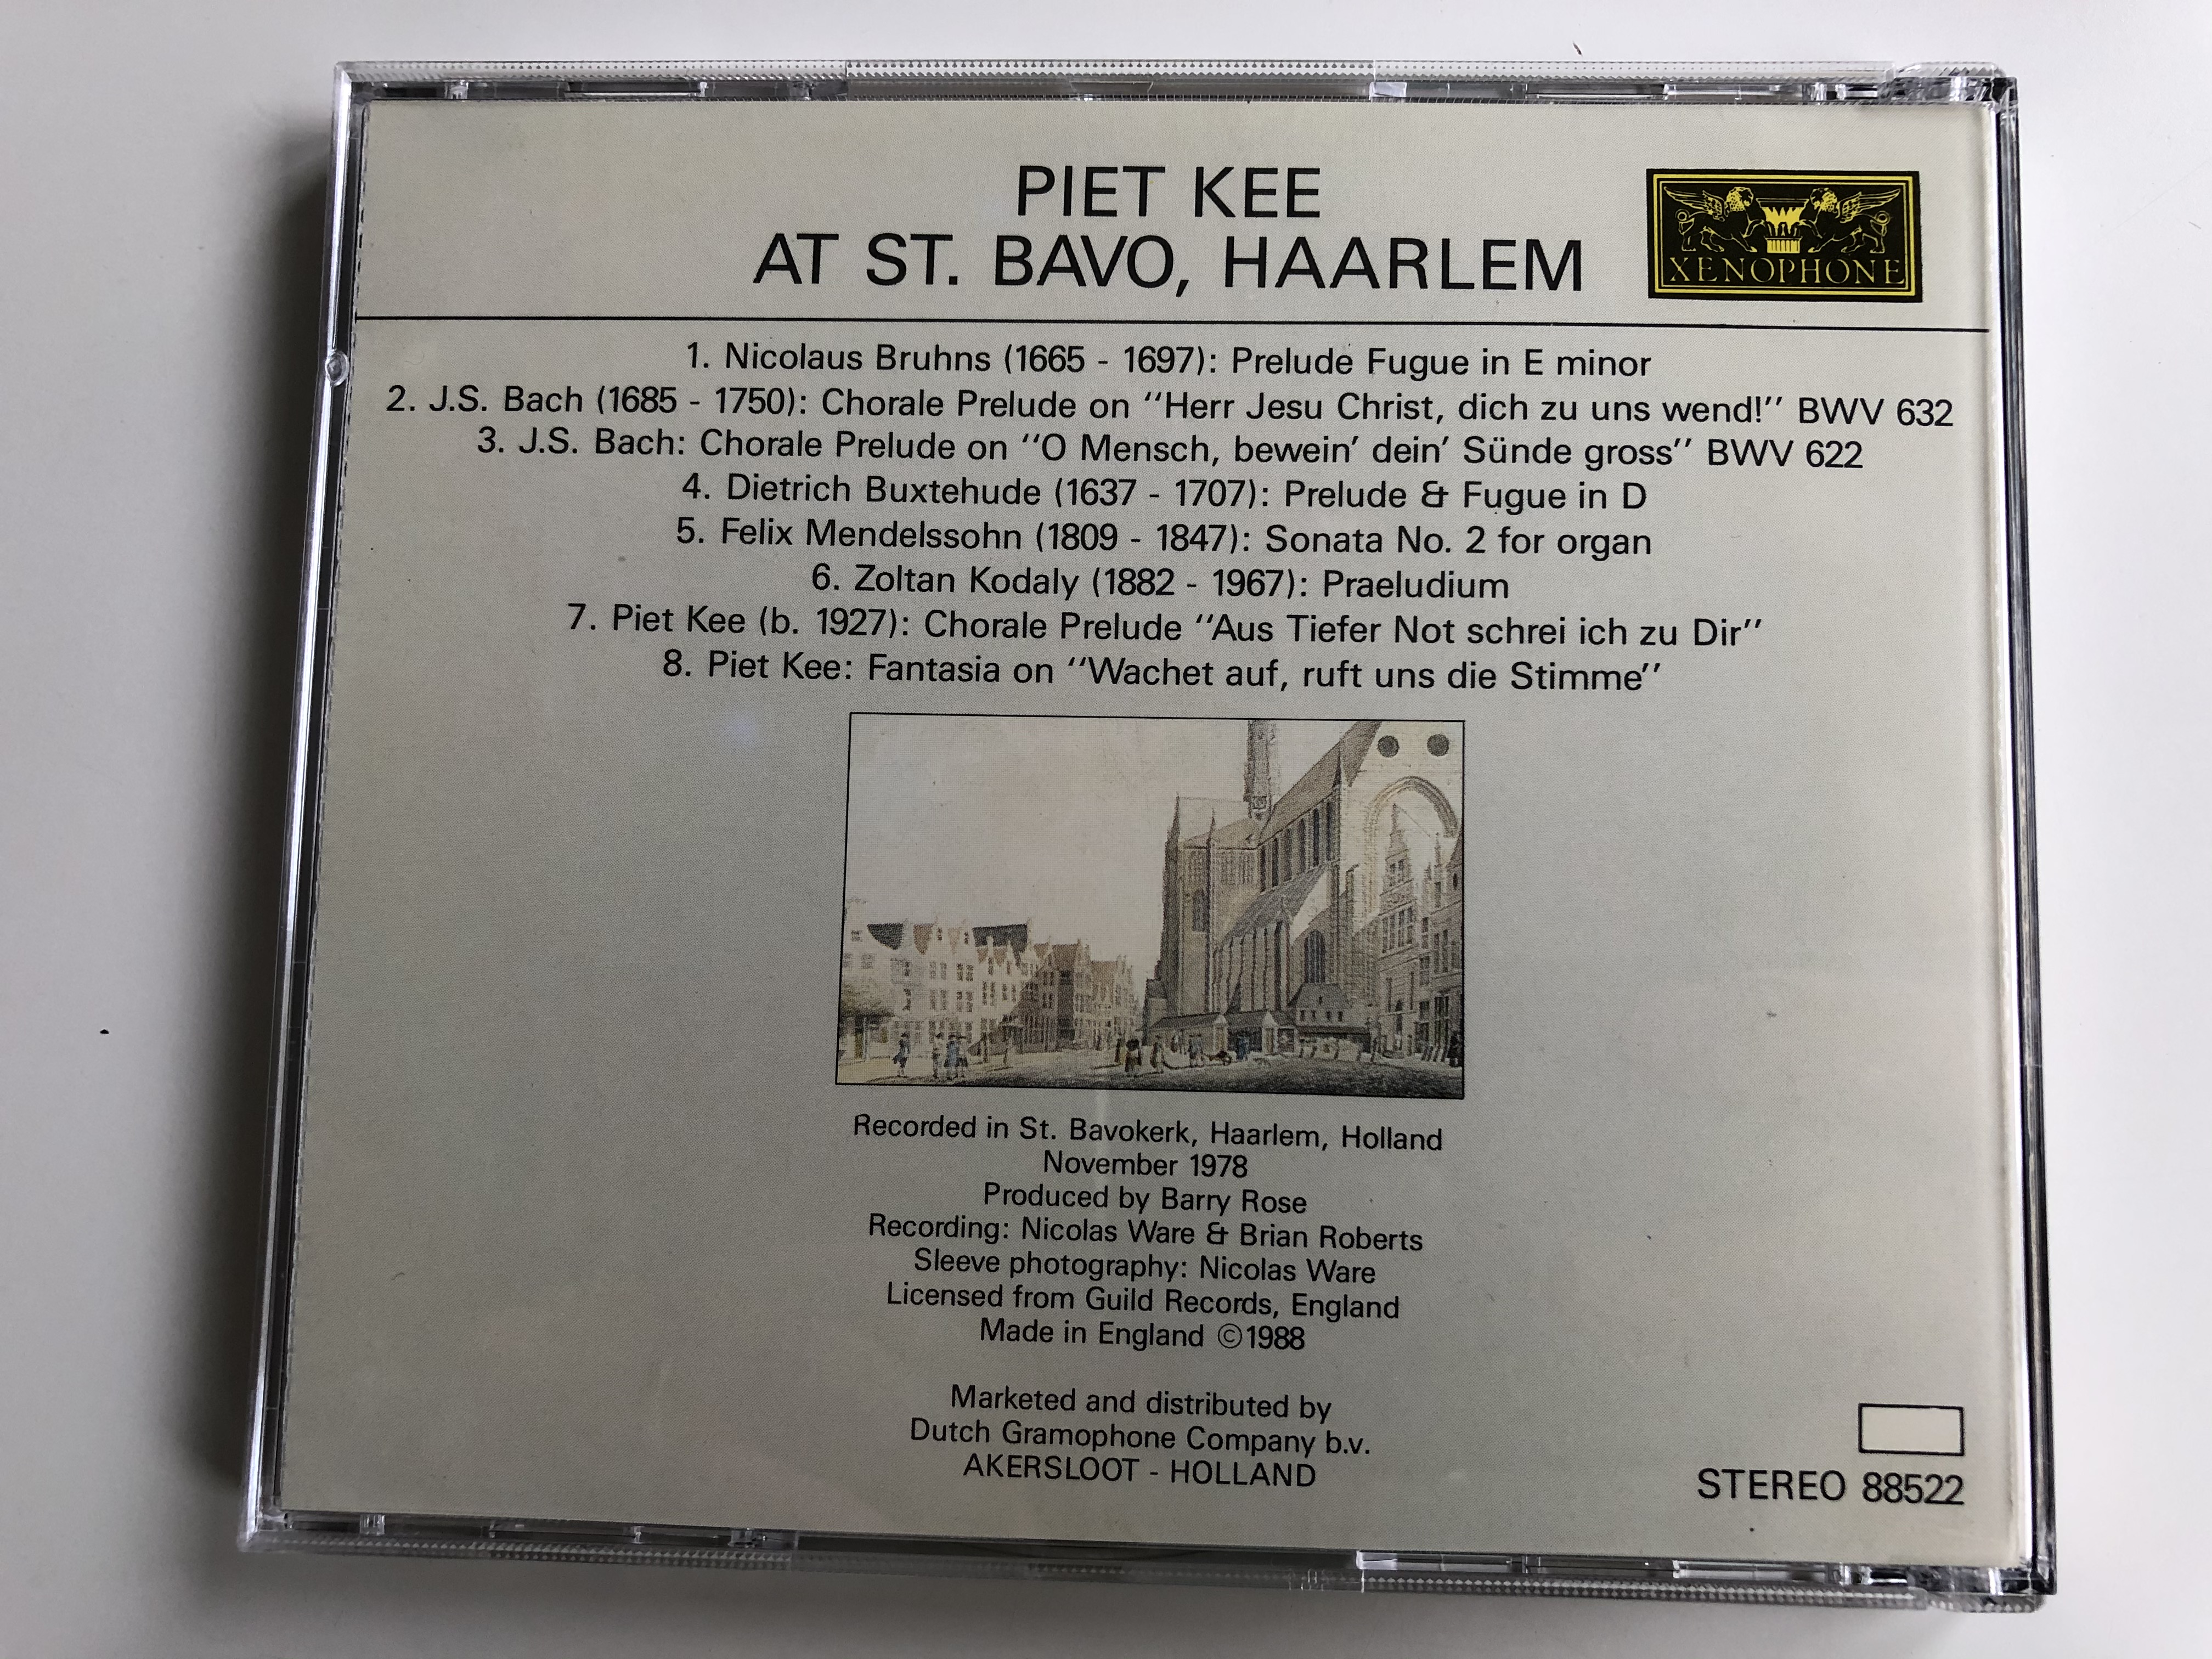 piet-kee-at-st.-bavo-haarlem-xenophone-audio-cd-1988-stereo-88522-5-.jpg